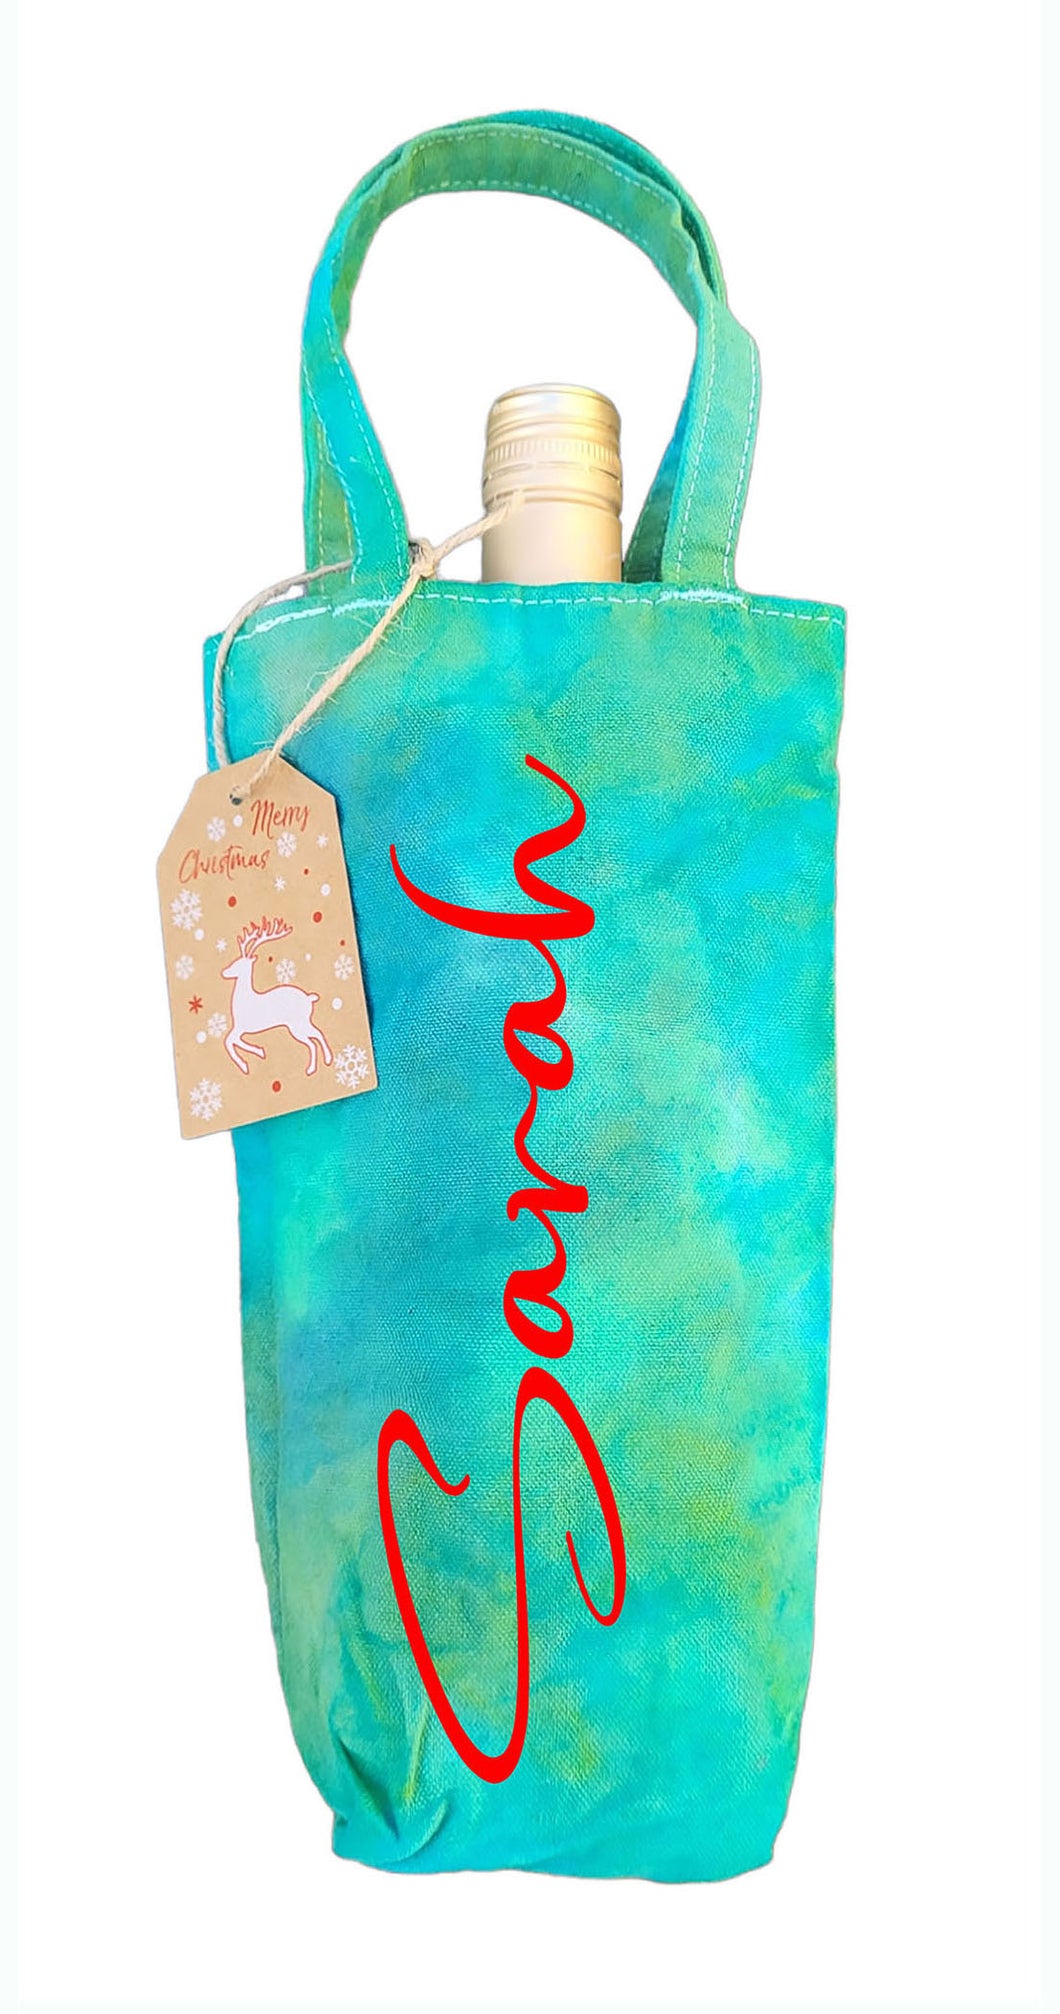 Personalised bottle bag - Tie dye bottle bag (One size) - colours customisable